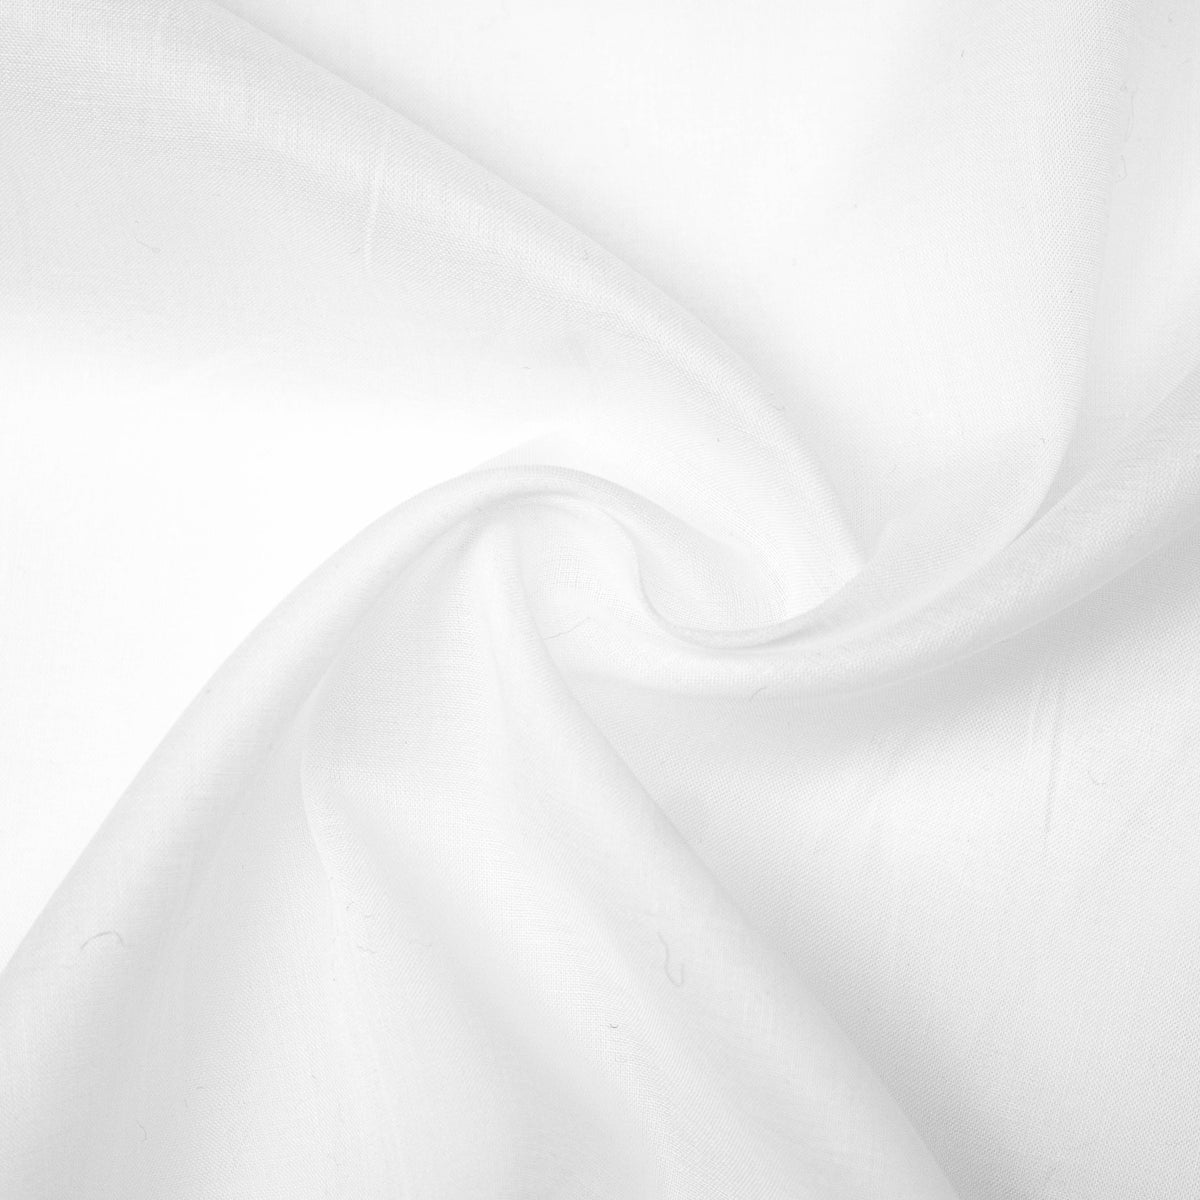 Fifine White Cotton Voile | THE FABRIC SALES